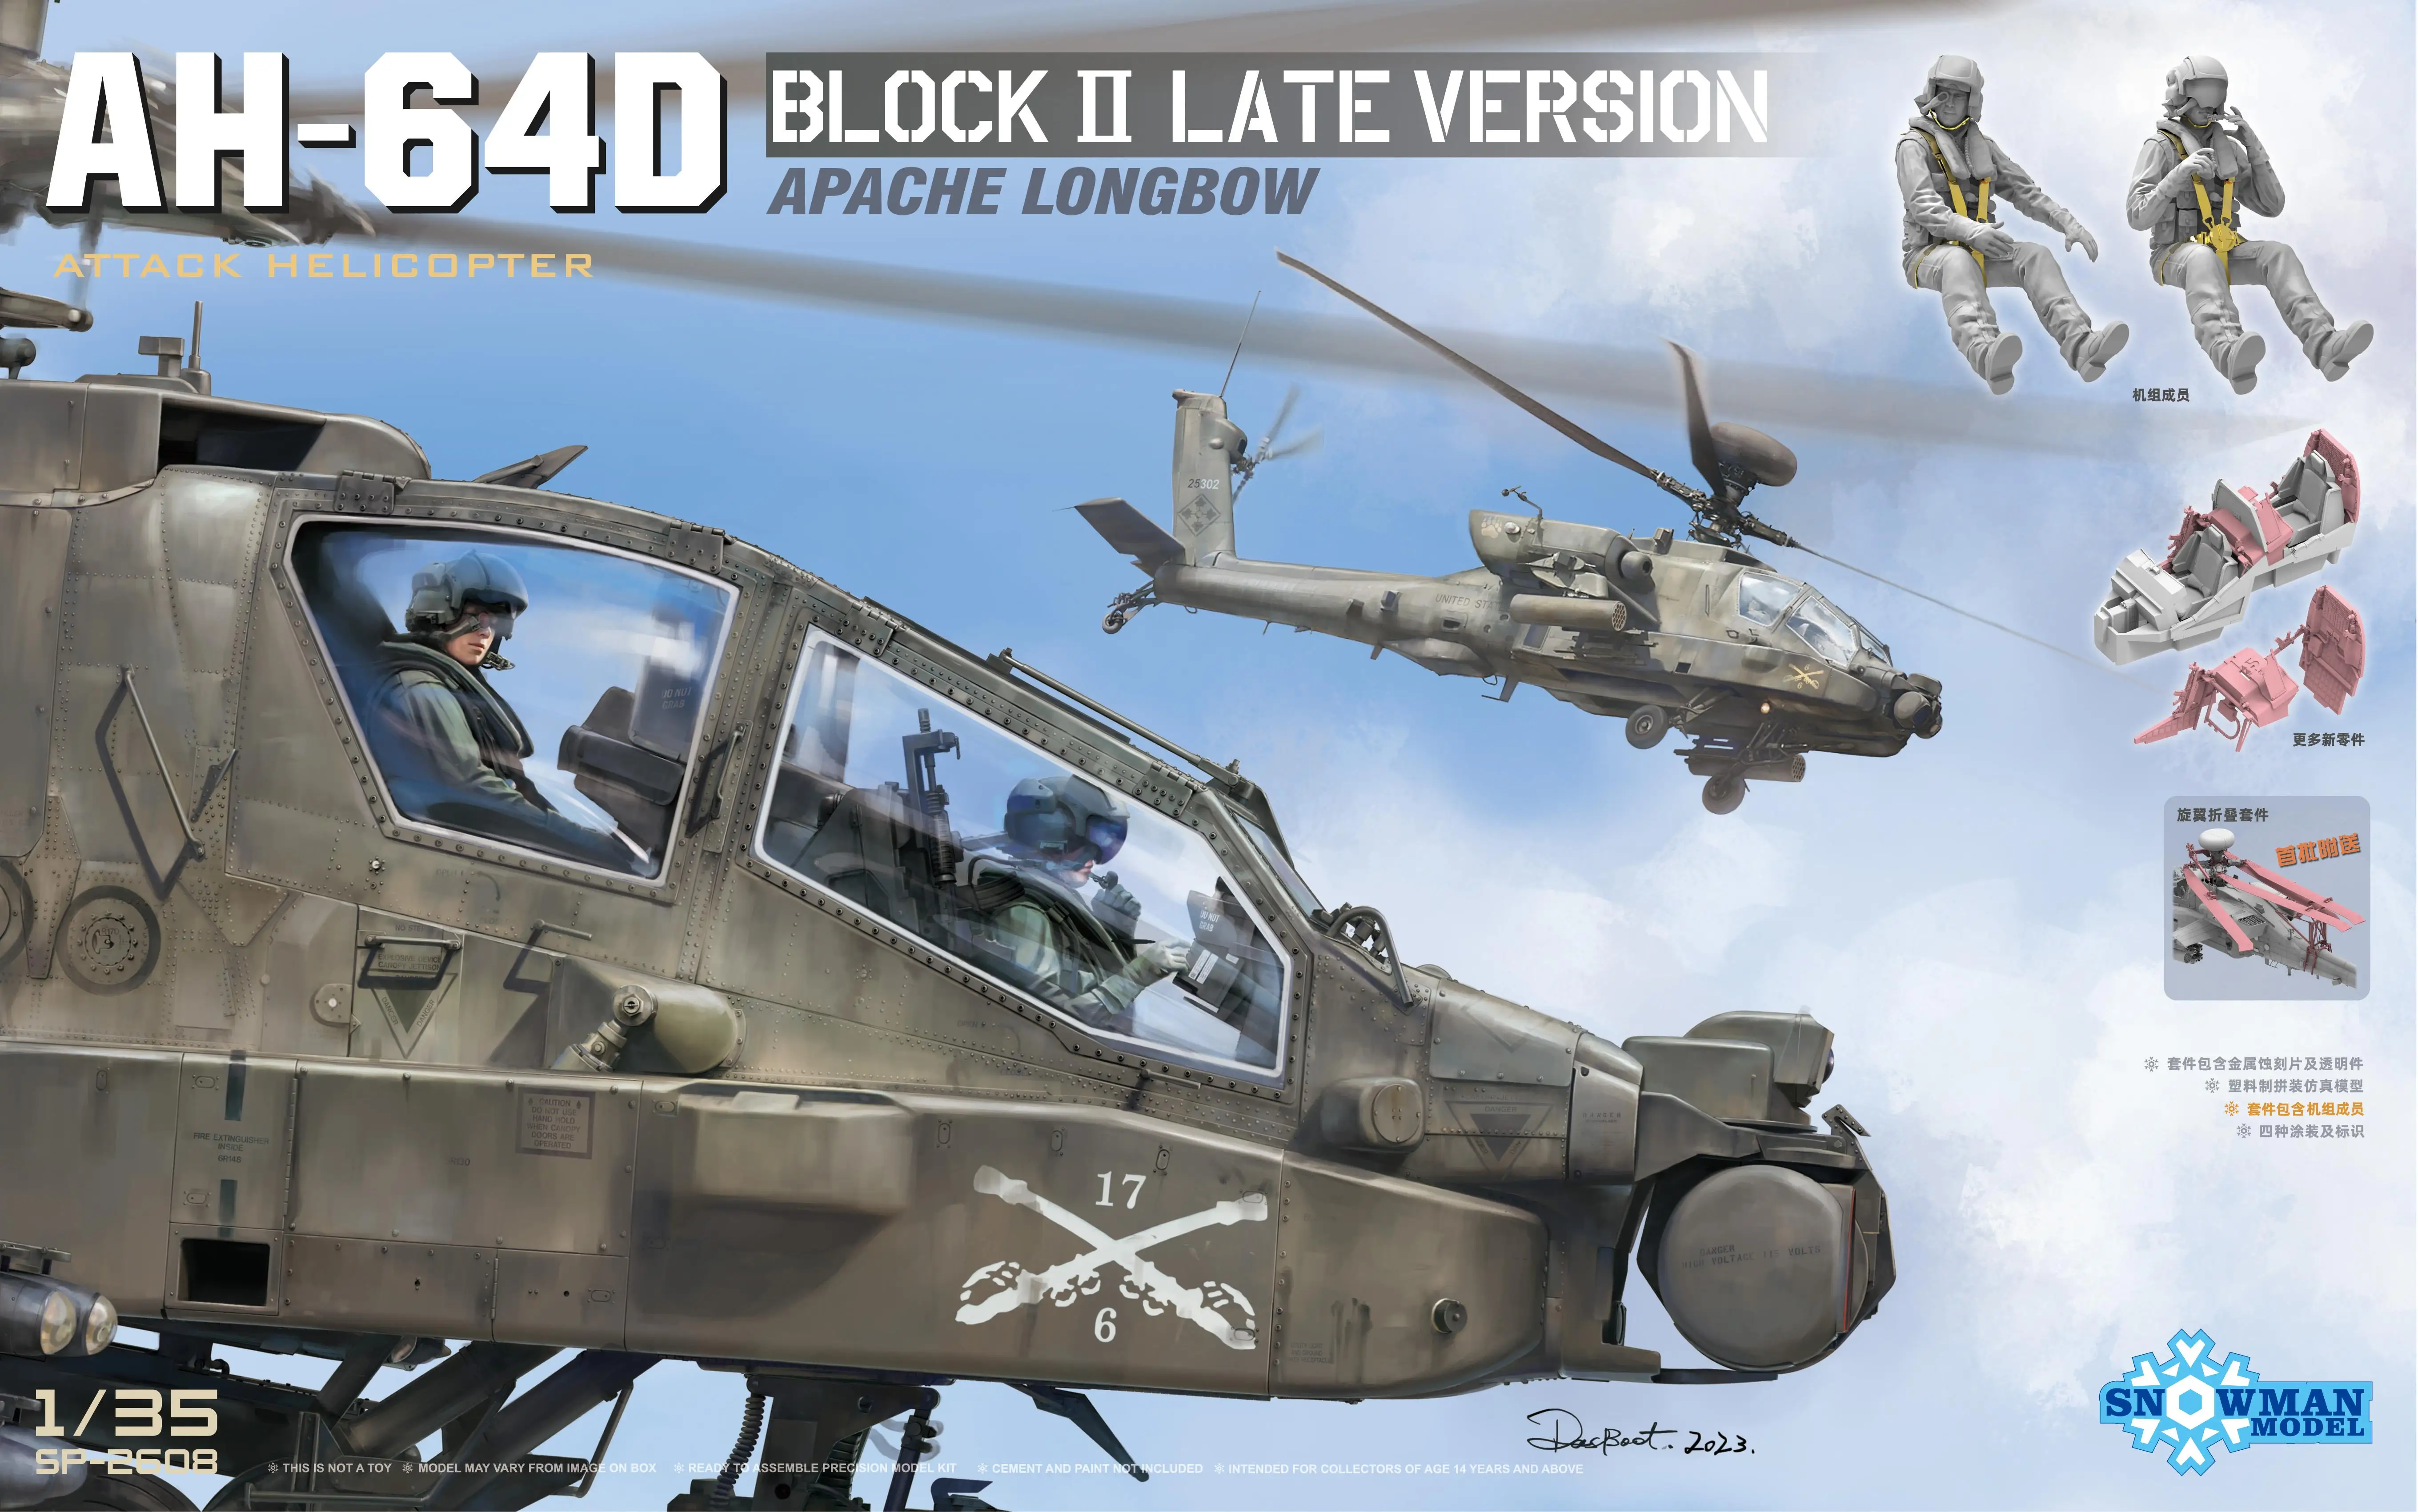 

SNOWMAN MODEL SP-2608 1/35 Scale AH-64D BLOCK II LATE VERSION APACHE LONGBOW